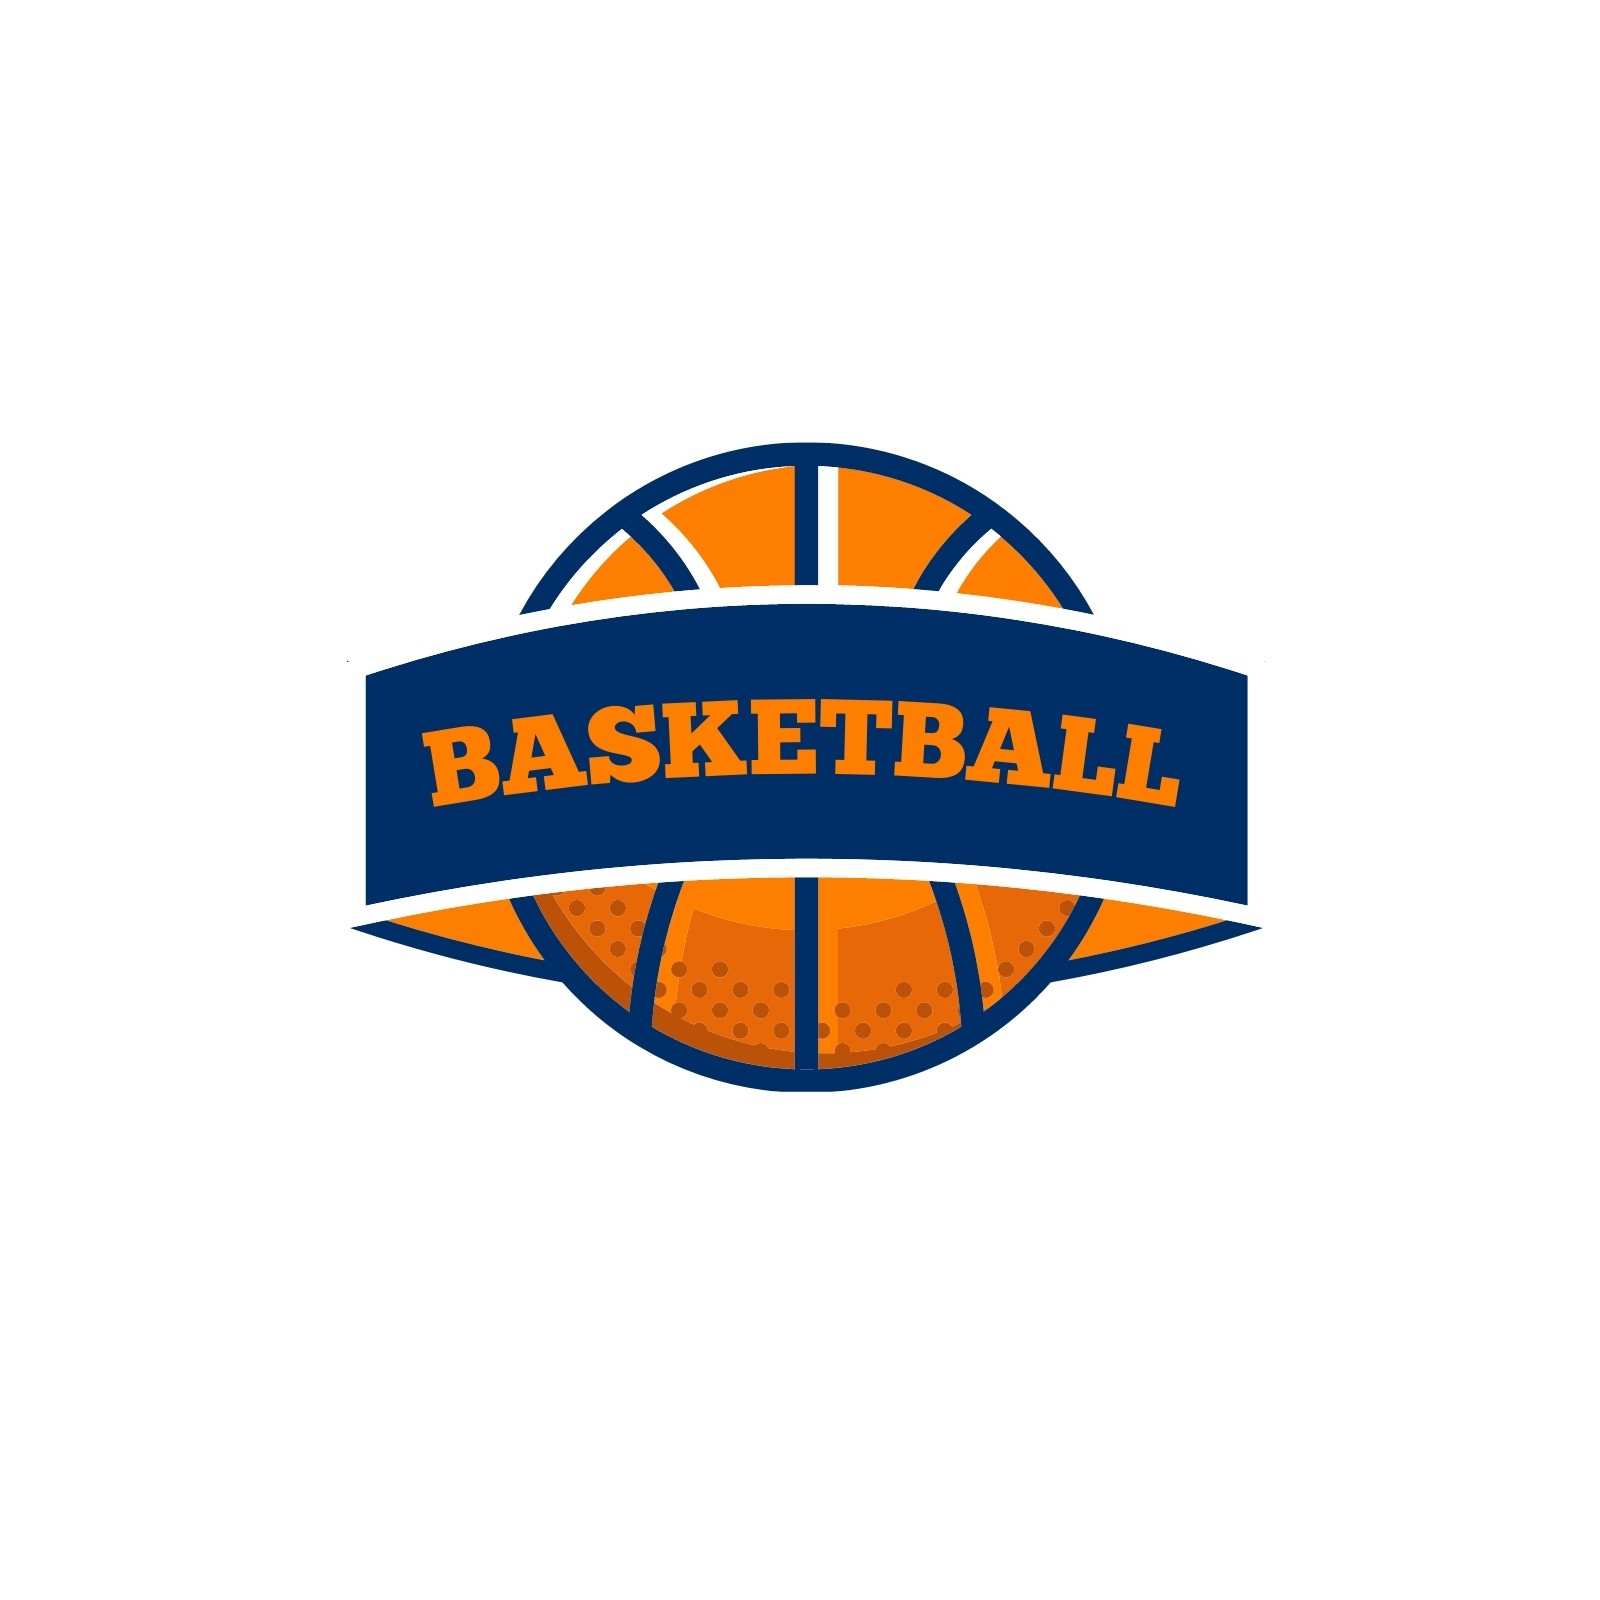 Premium Vector  Letter 1 basket ball logo design for basket club